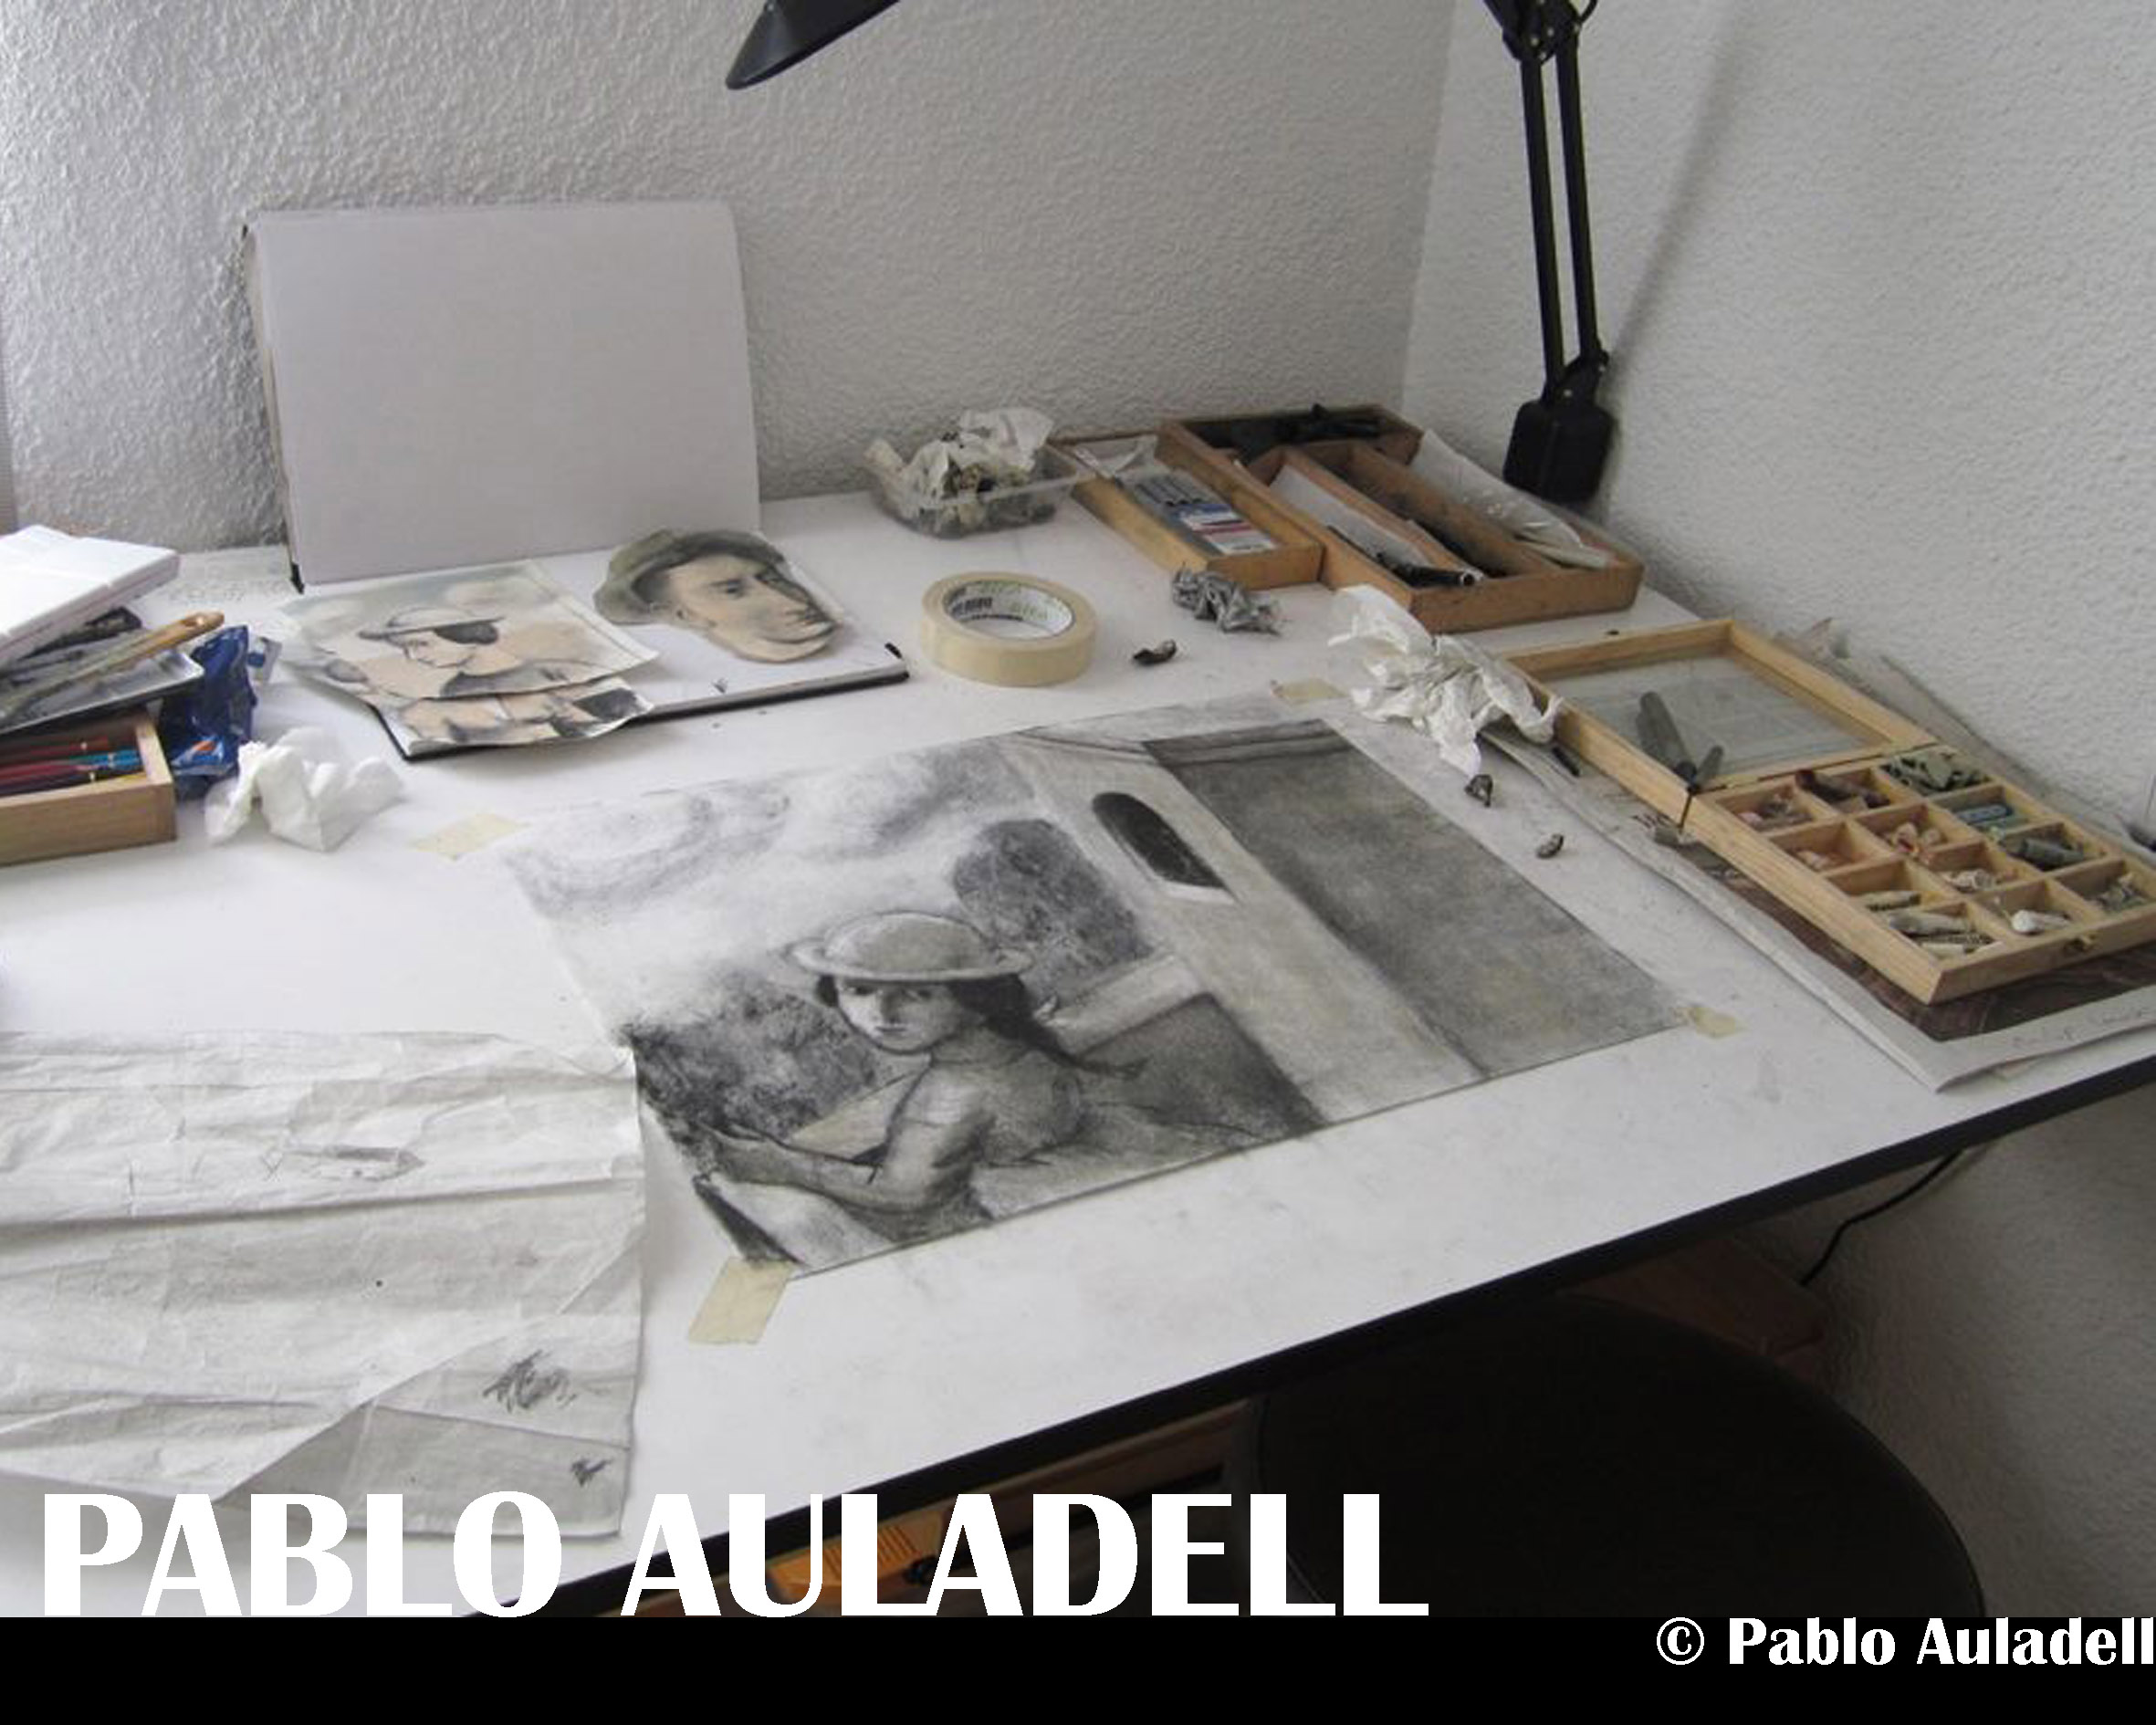 Pablo Auladell